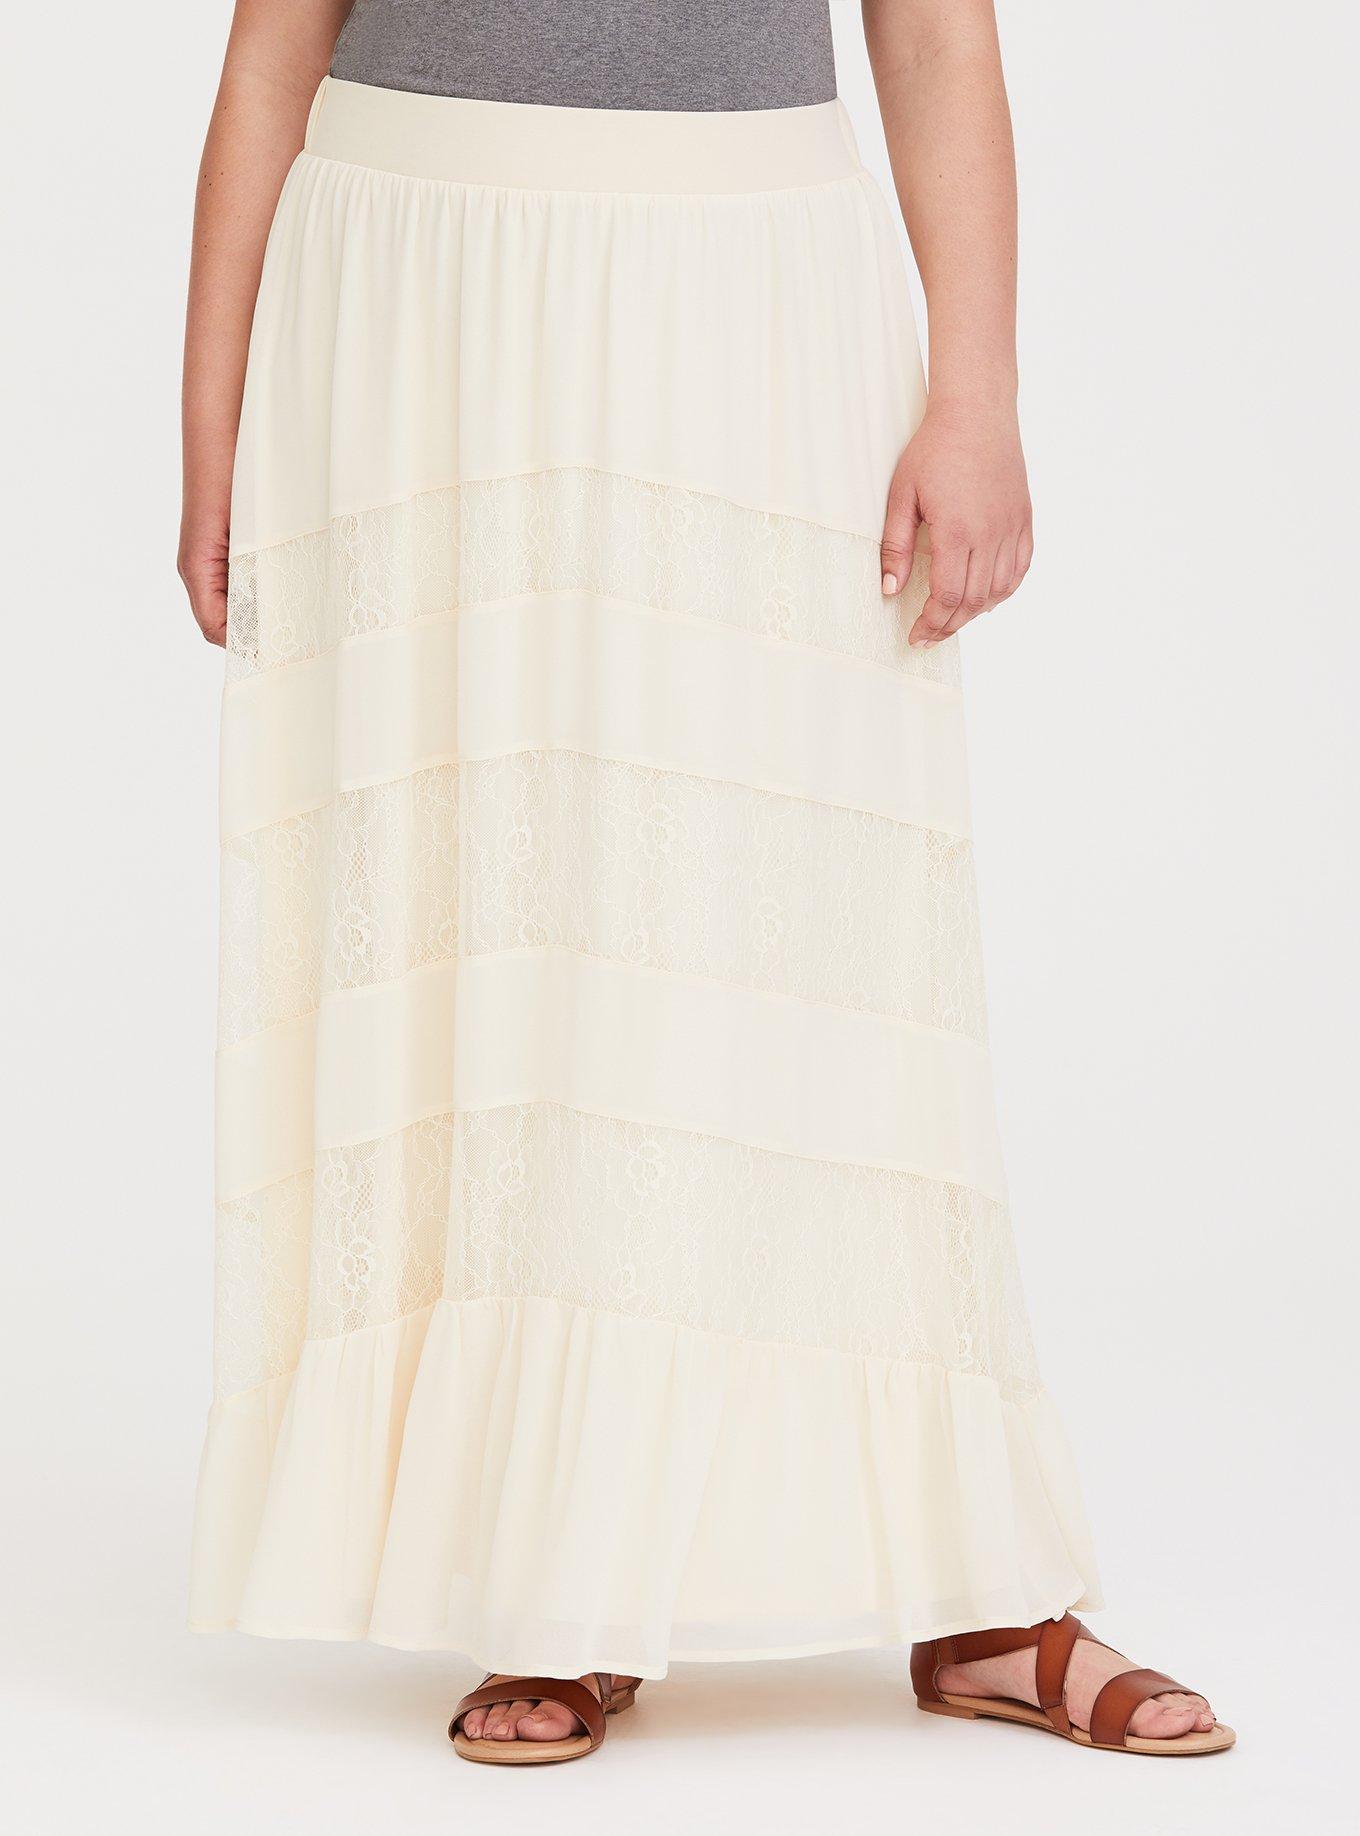 Plus Size - Ivory Lace Chiffon Maxi Skirt - Torrid